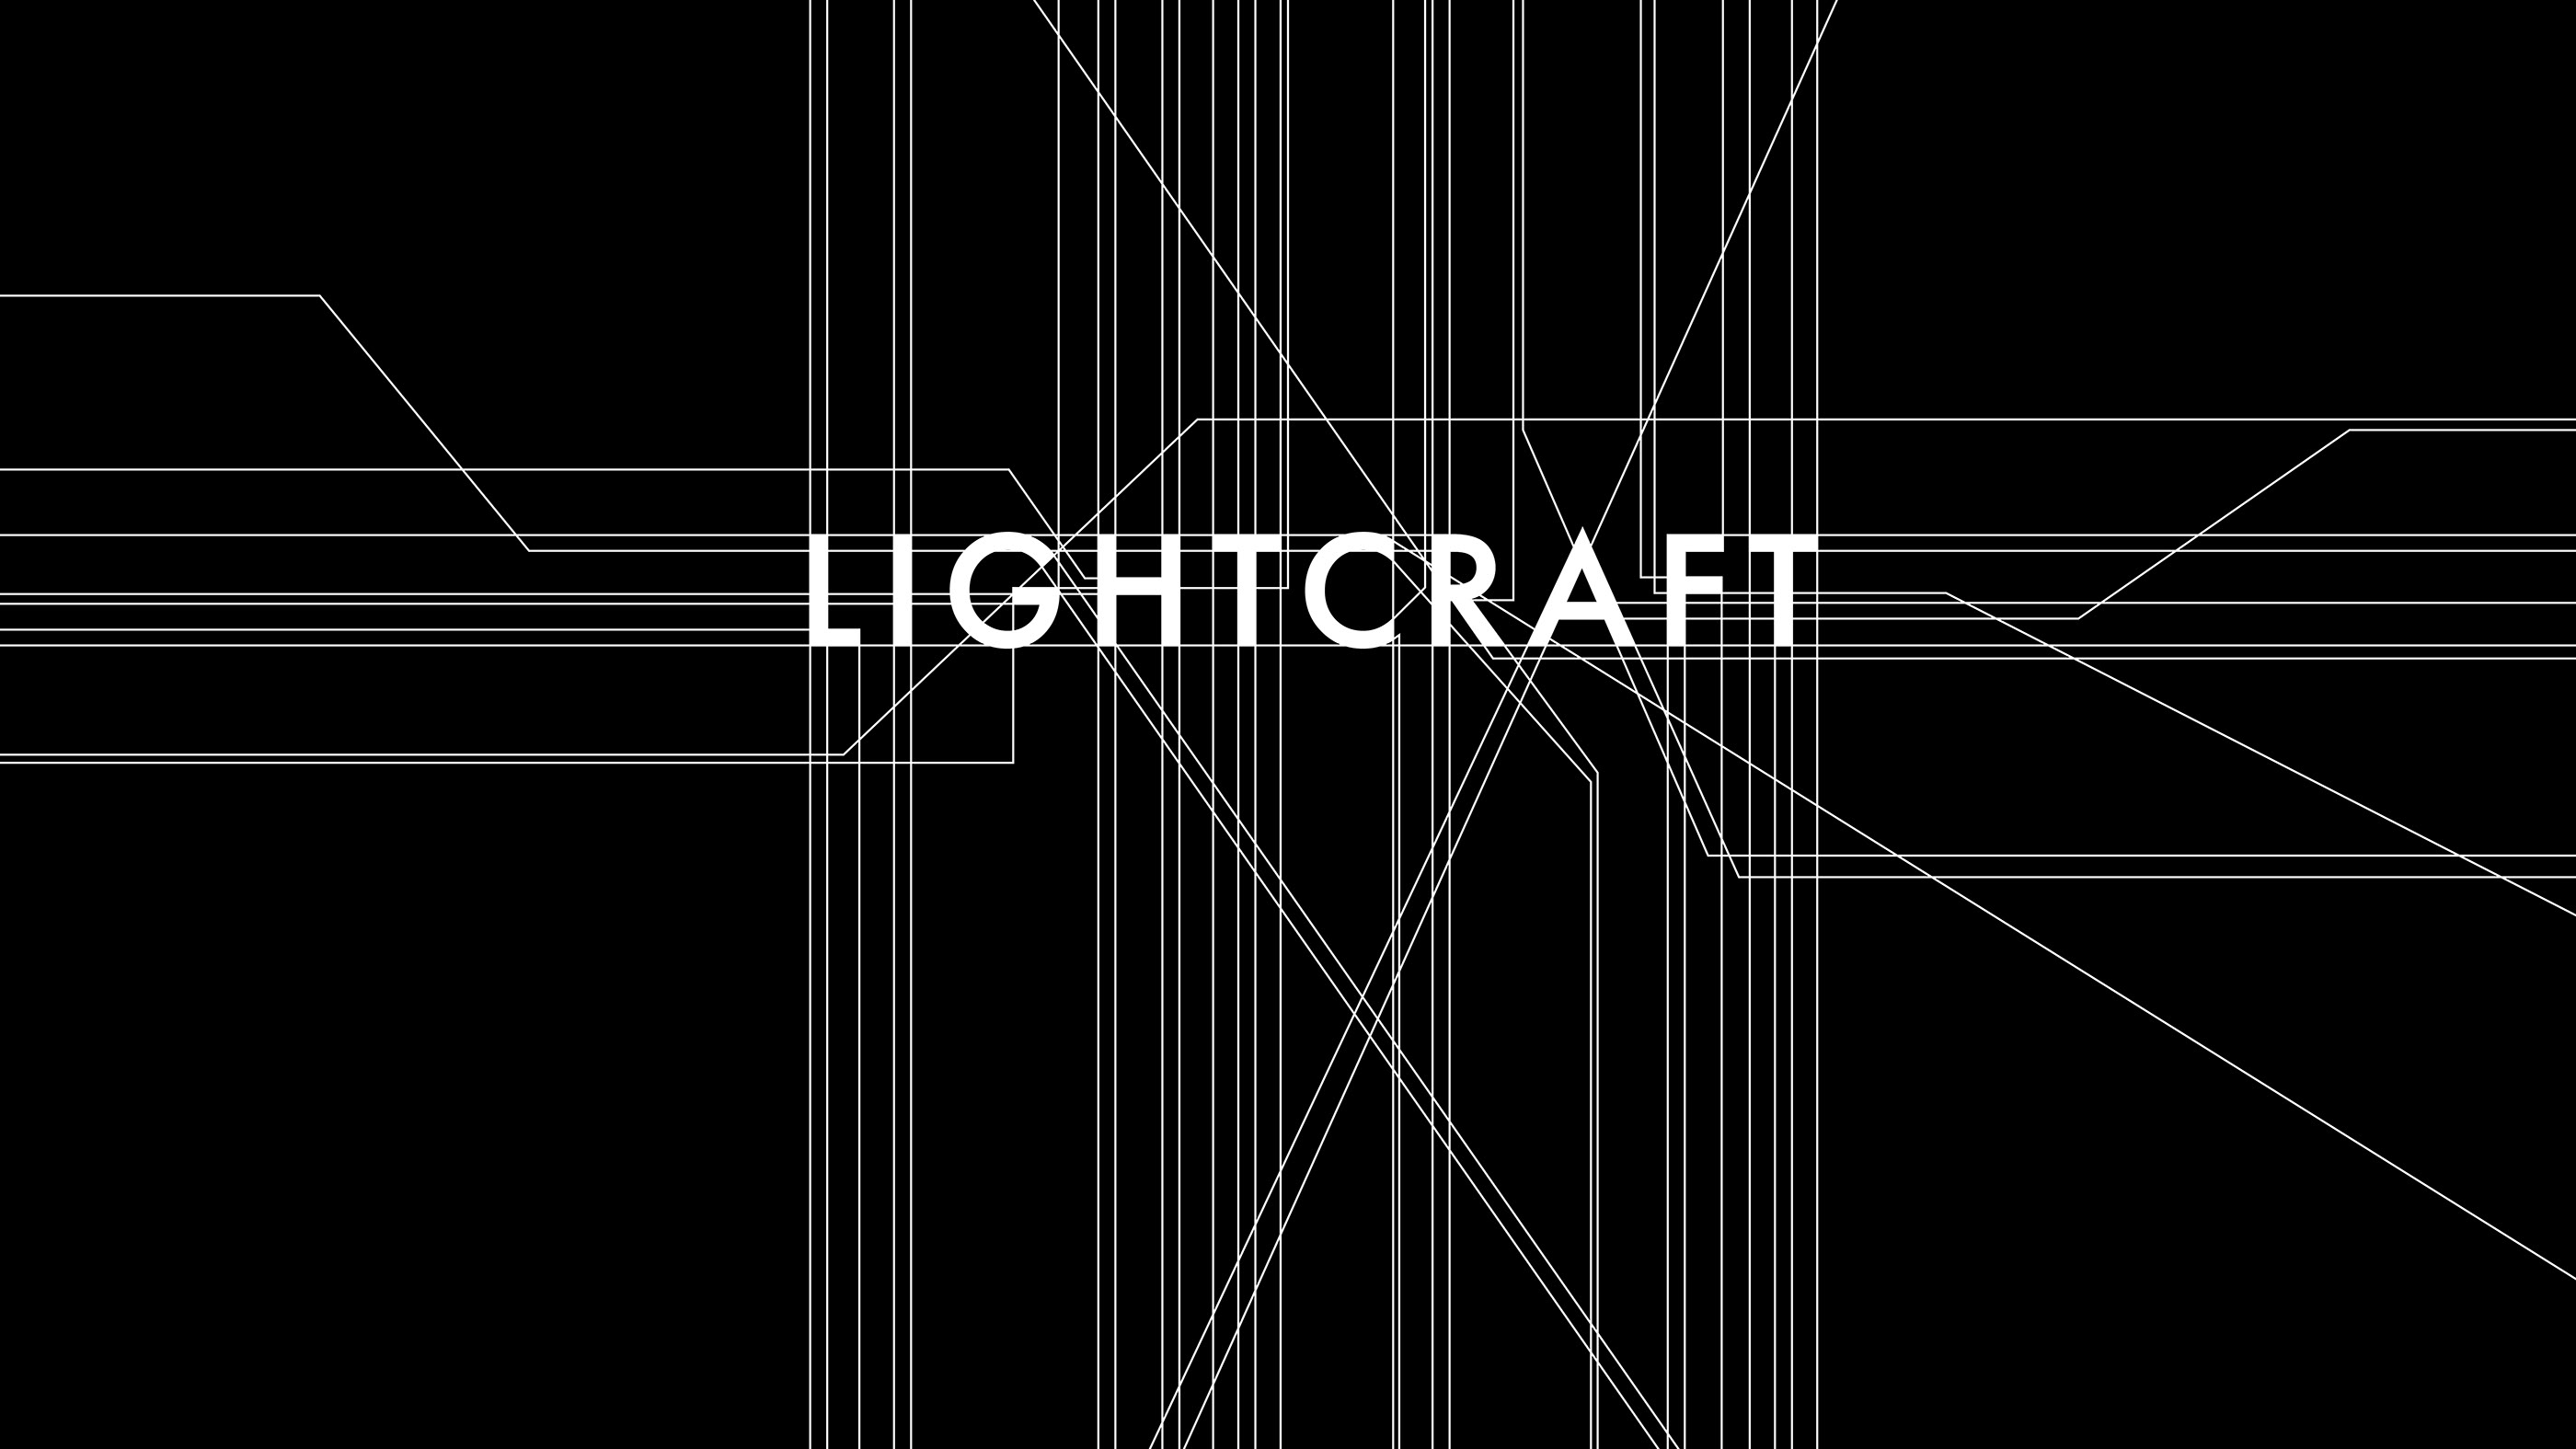 LIGHTCRAFT logo animation.